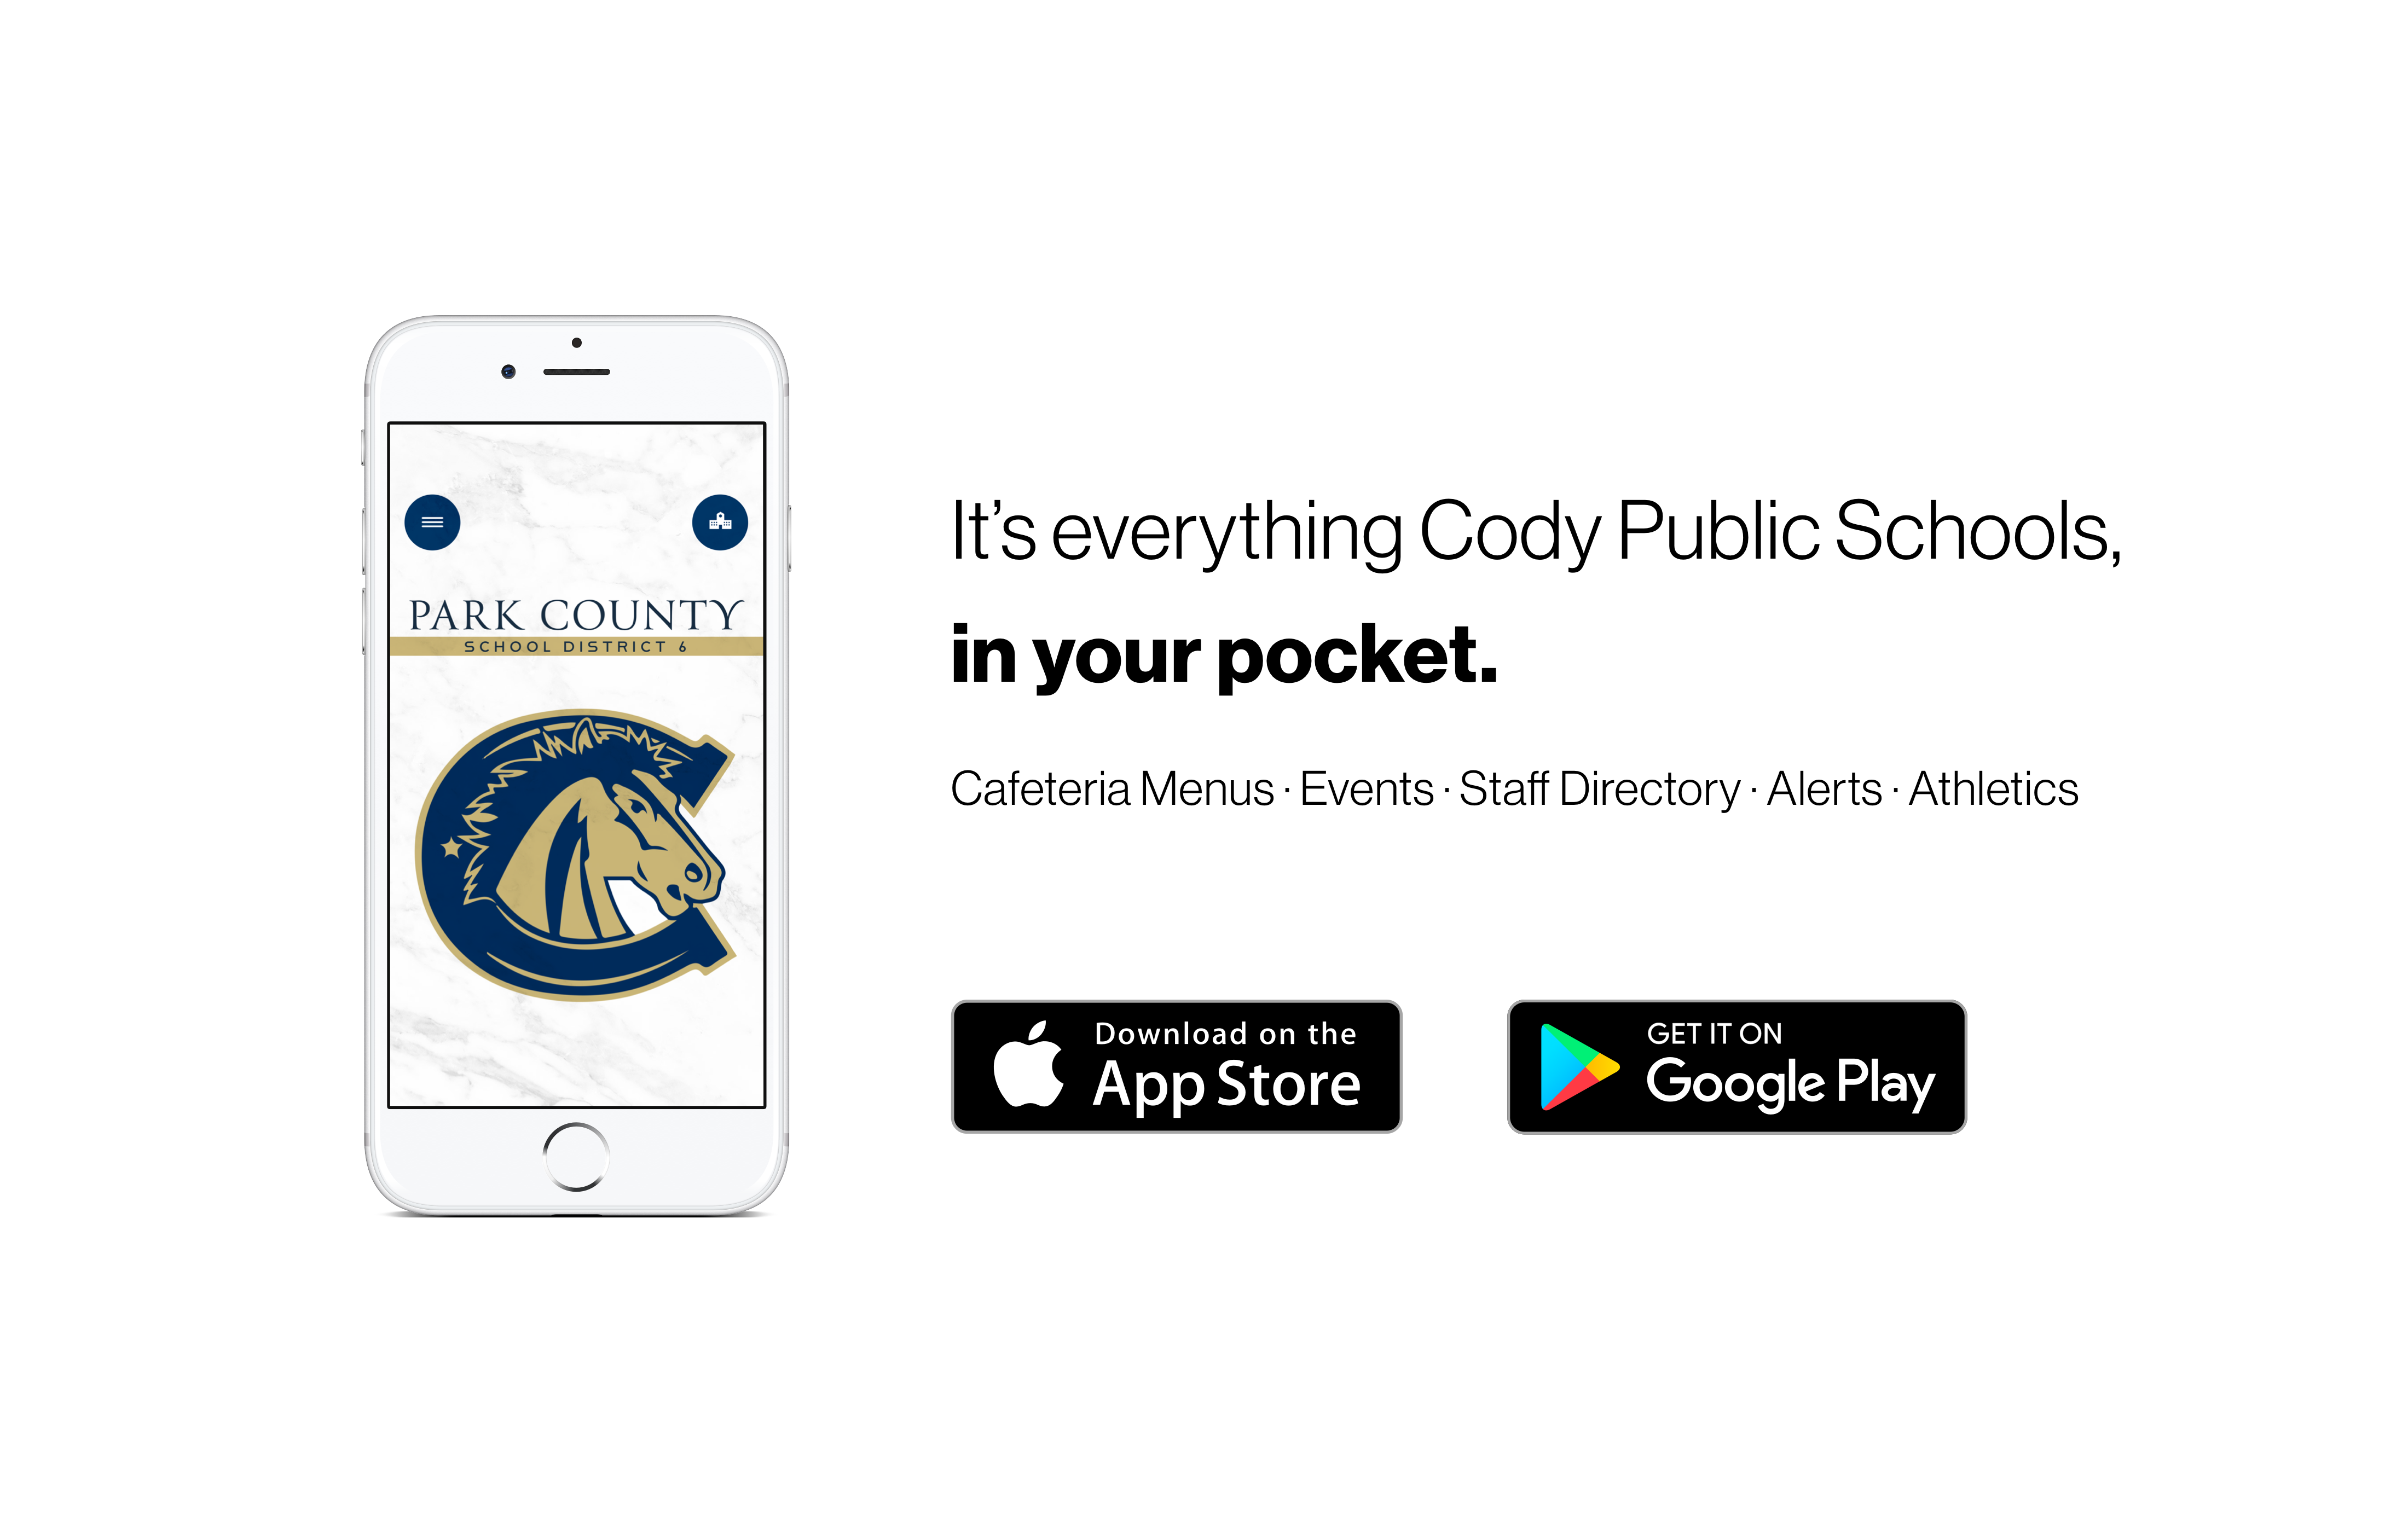 Cody Public Schools is in the app store